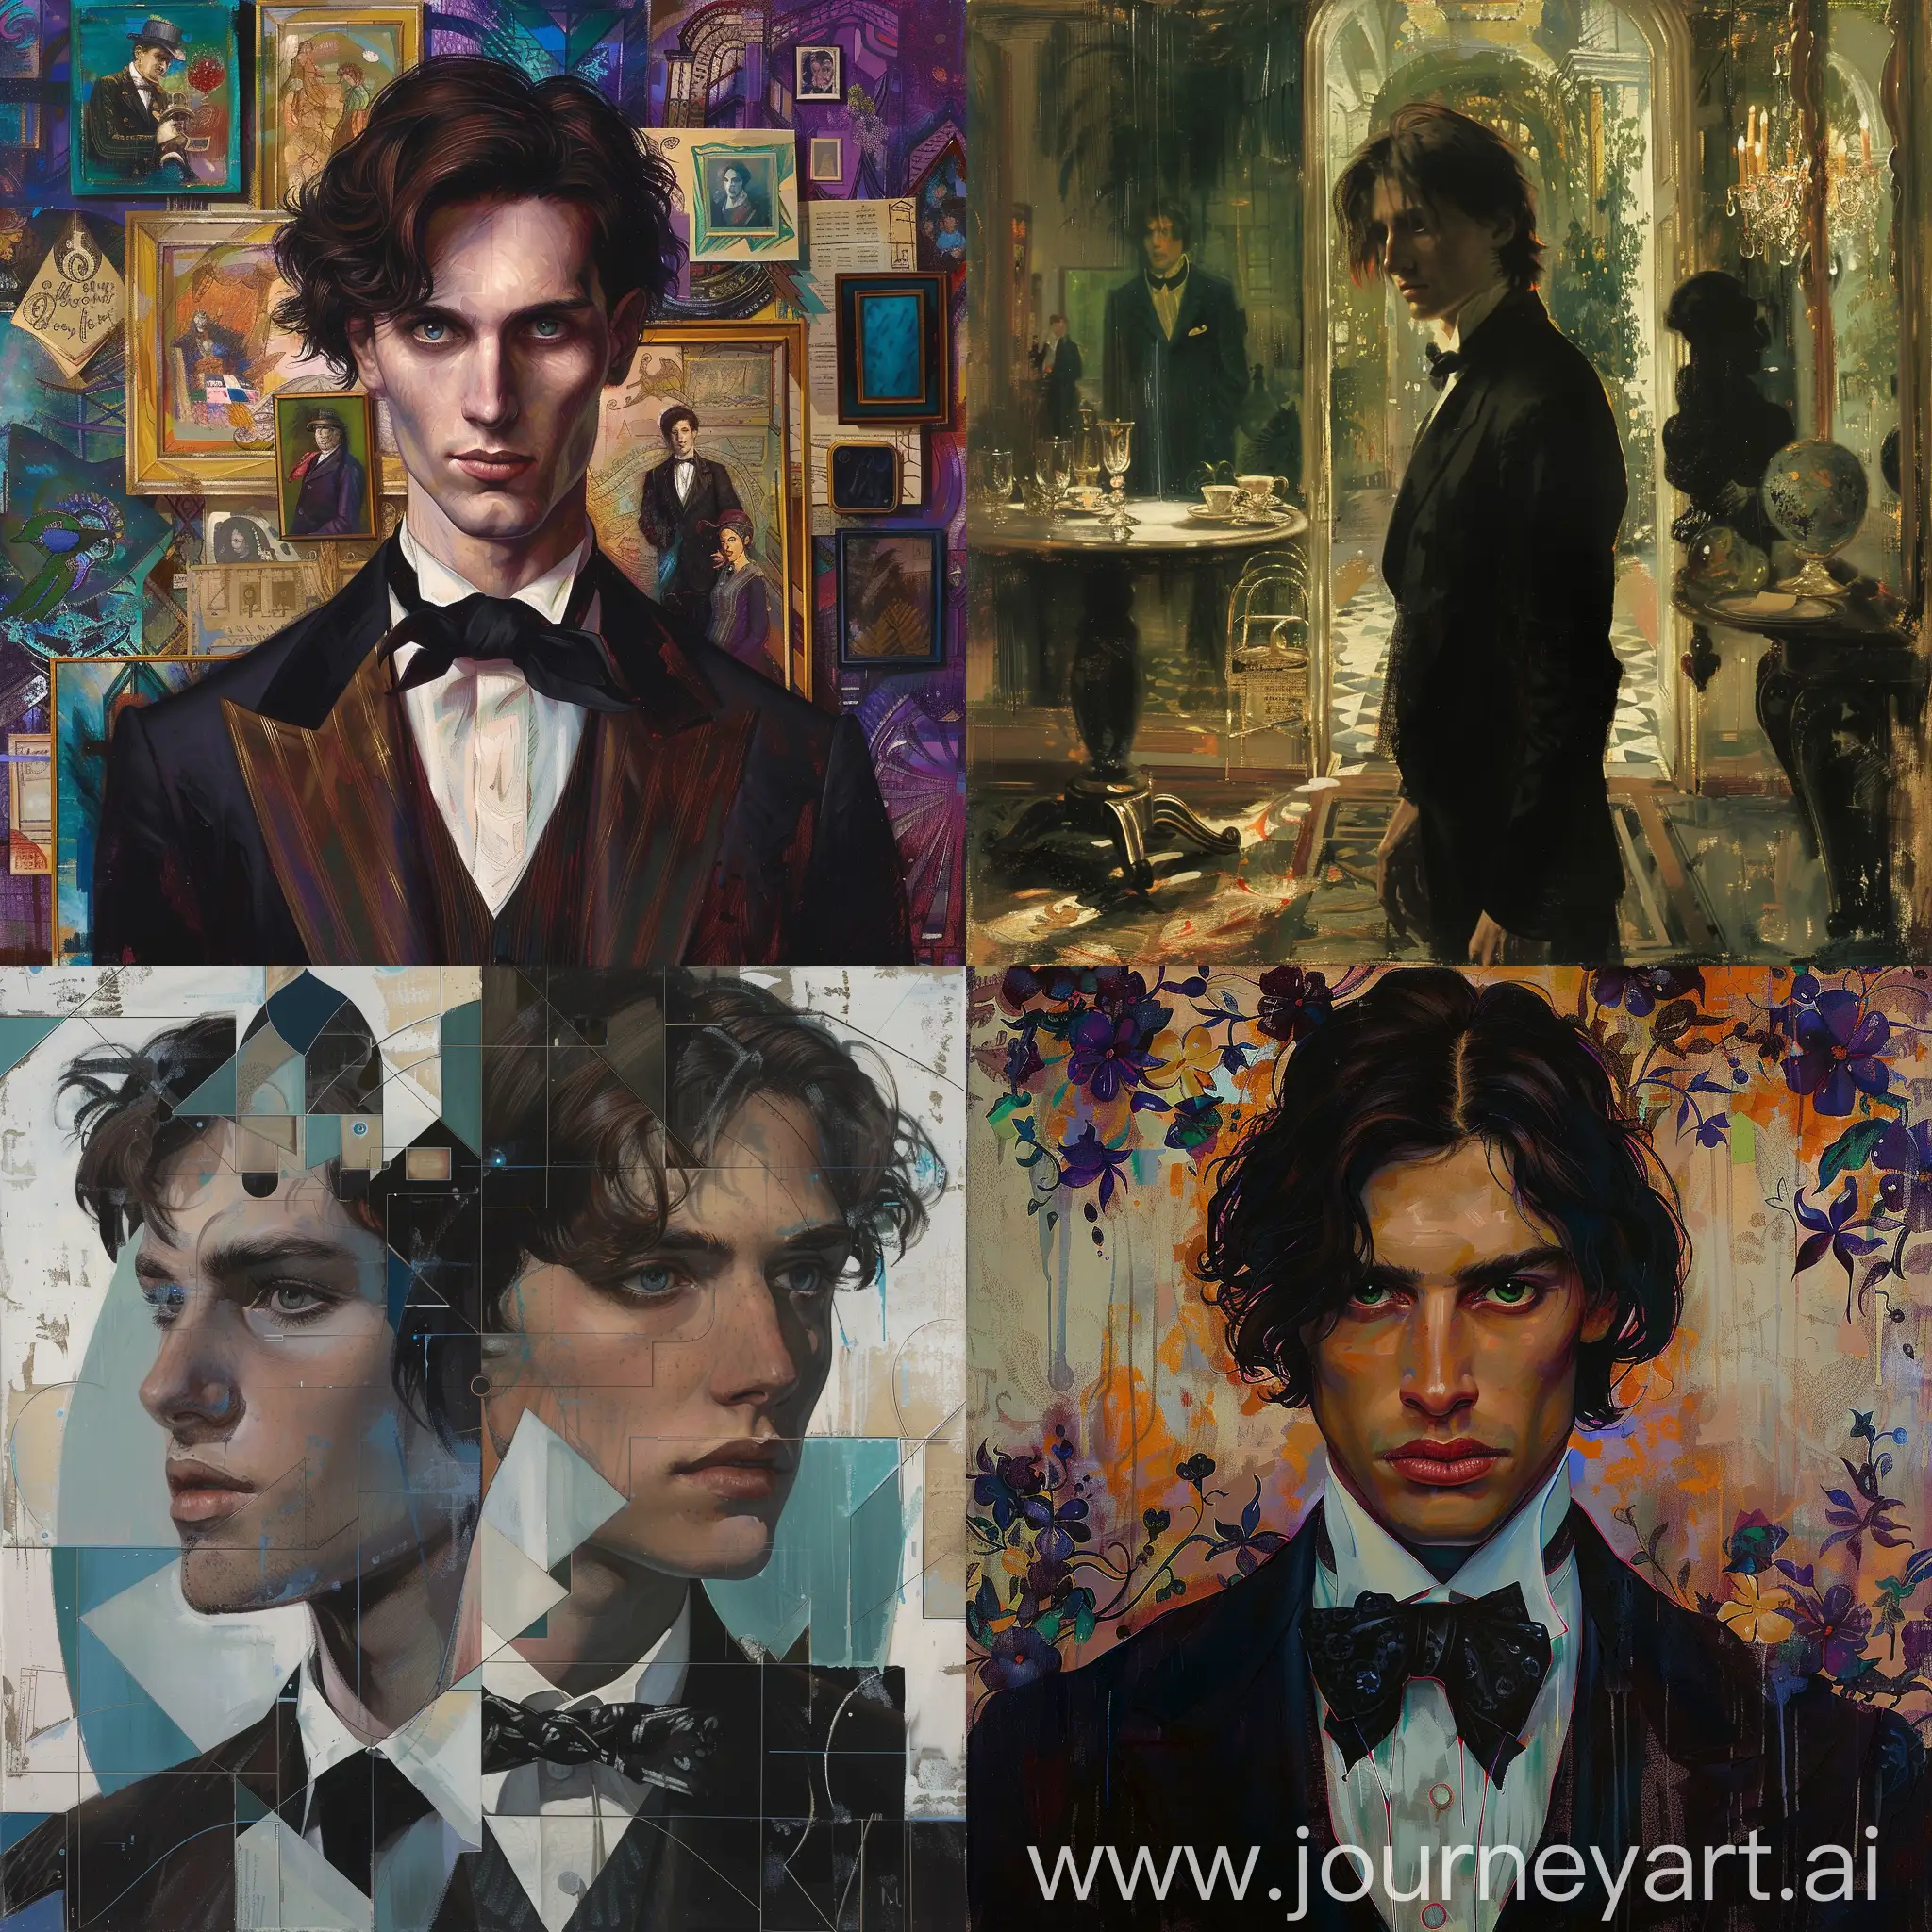 Futuristic-Portrait-of-Dorian-Gray-with-Dynamic-Futurism-Art-Elements